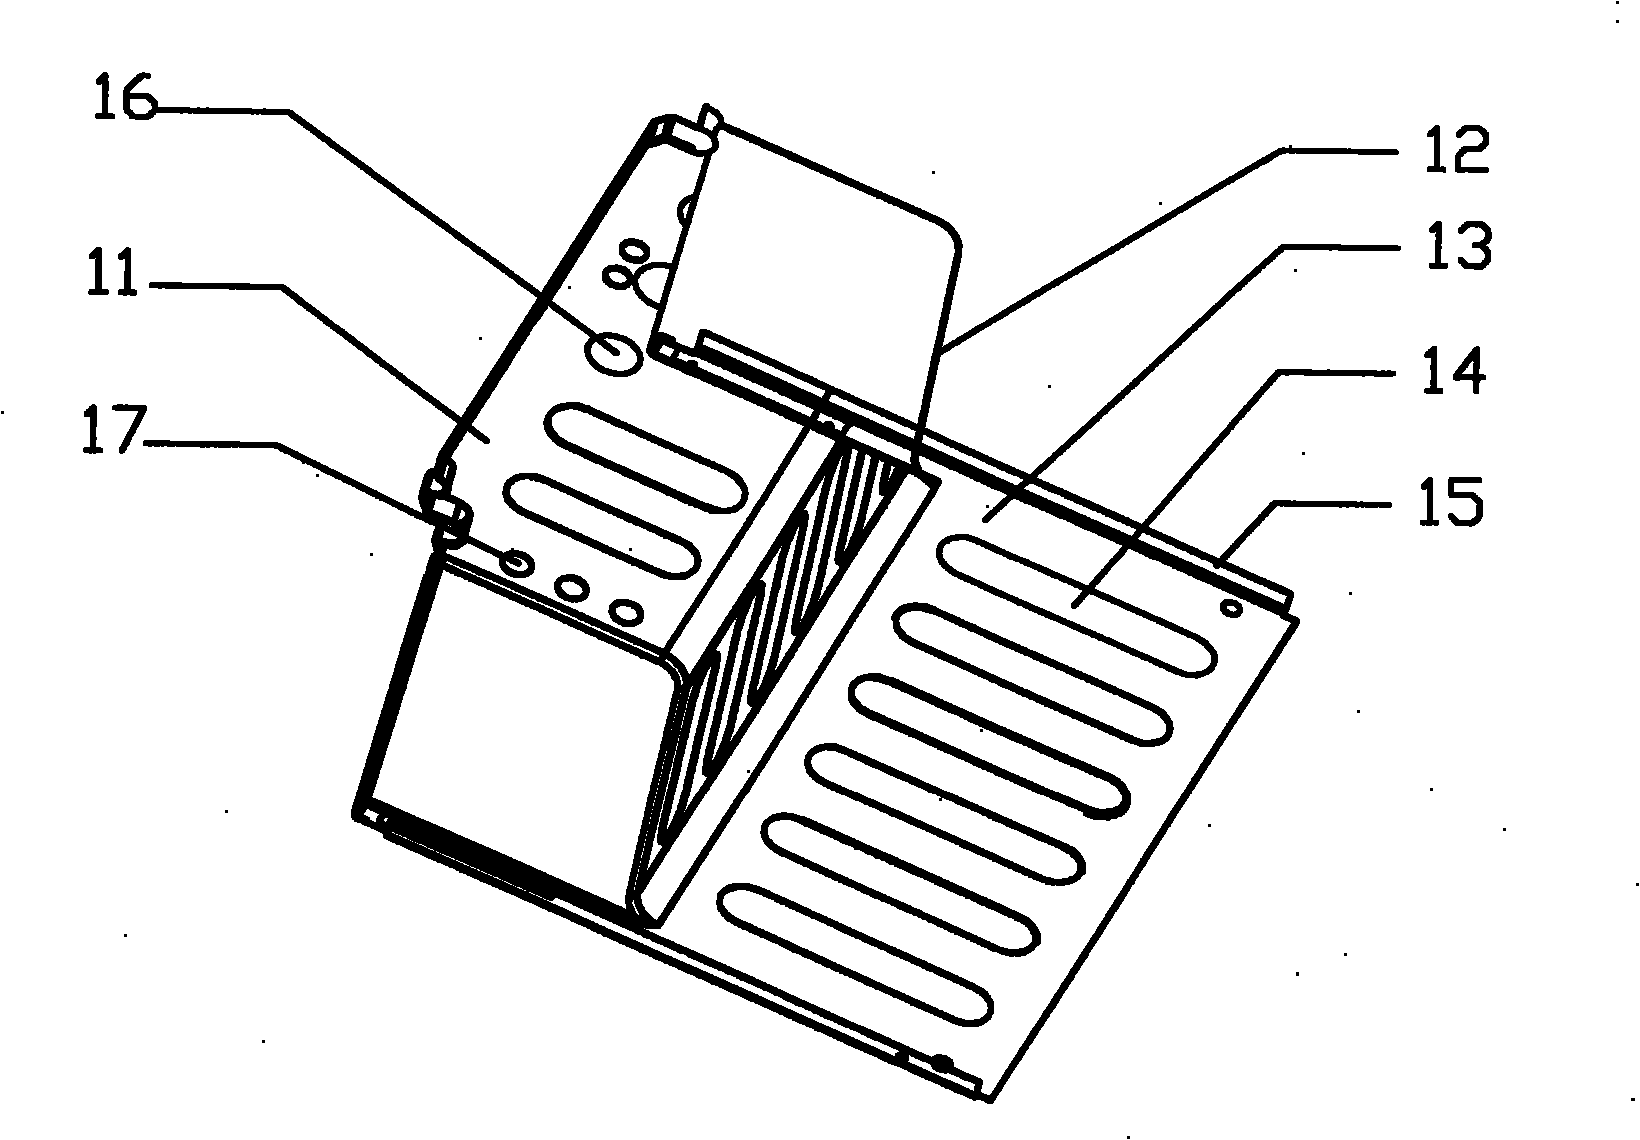 Compressor bin structure of refrigerator